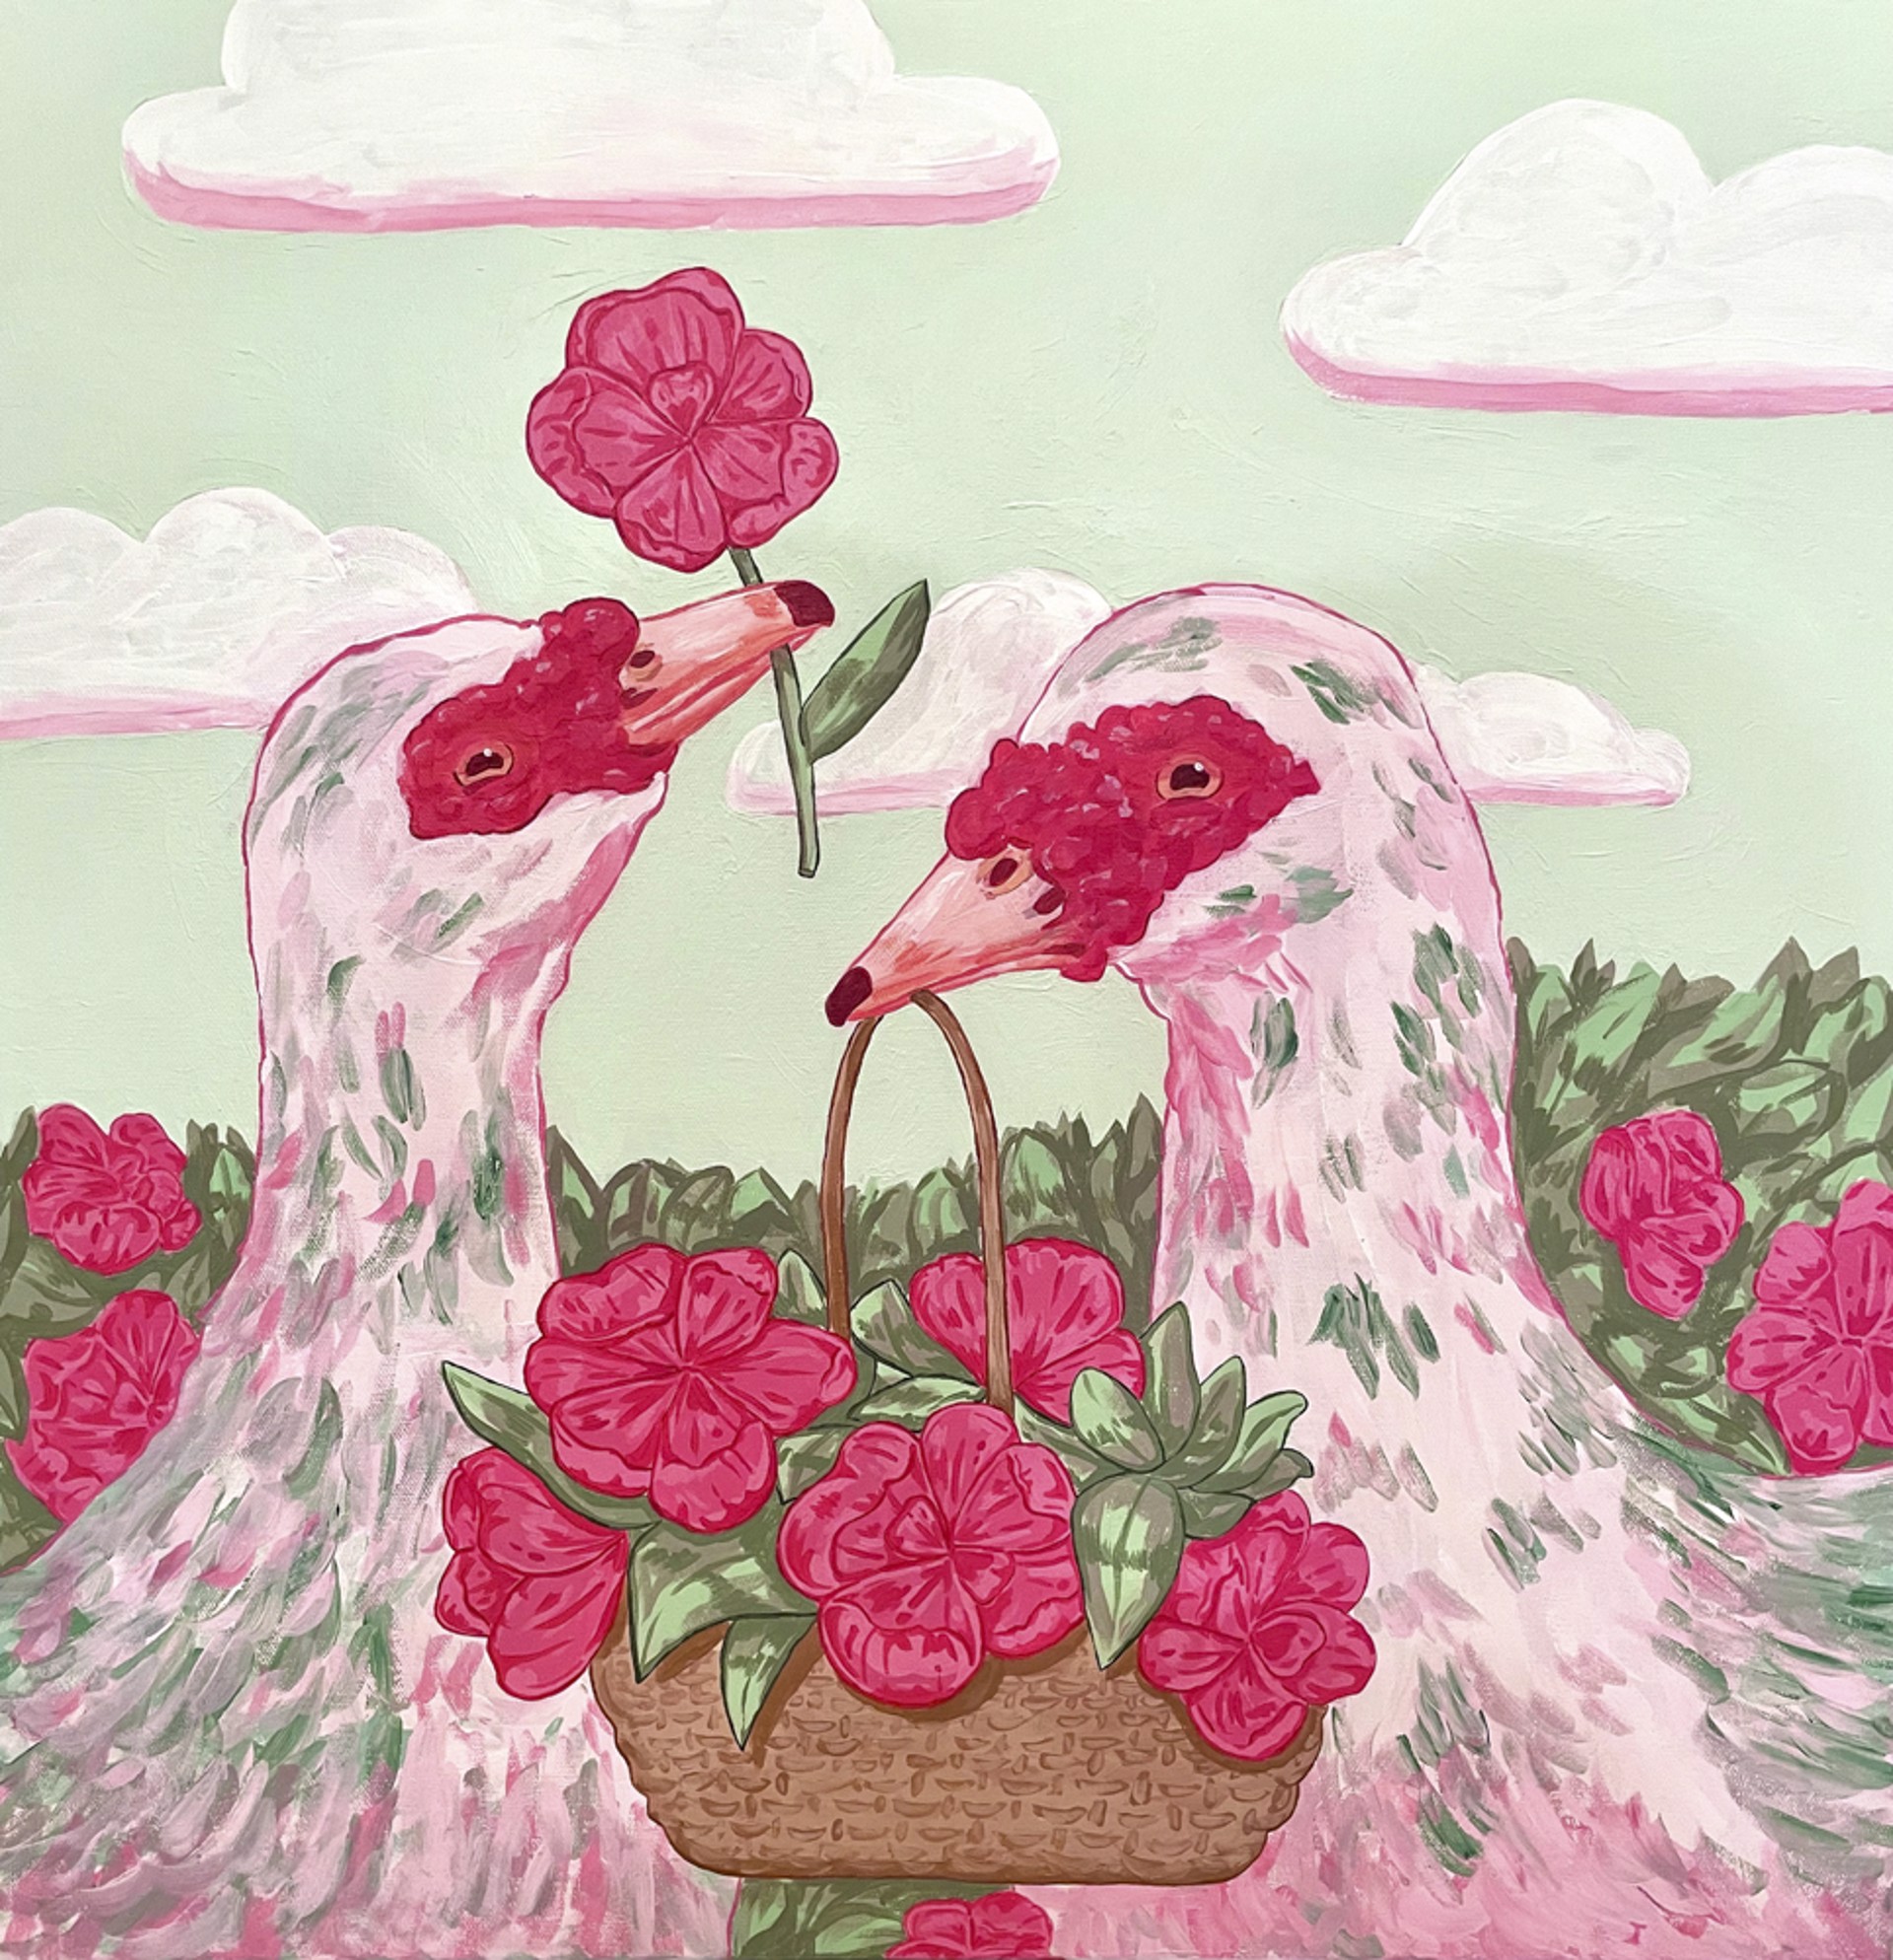 Ducks Love Flowers by Hanna Cohen